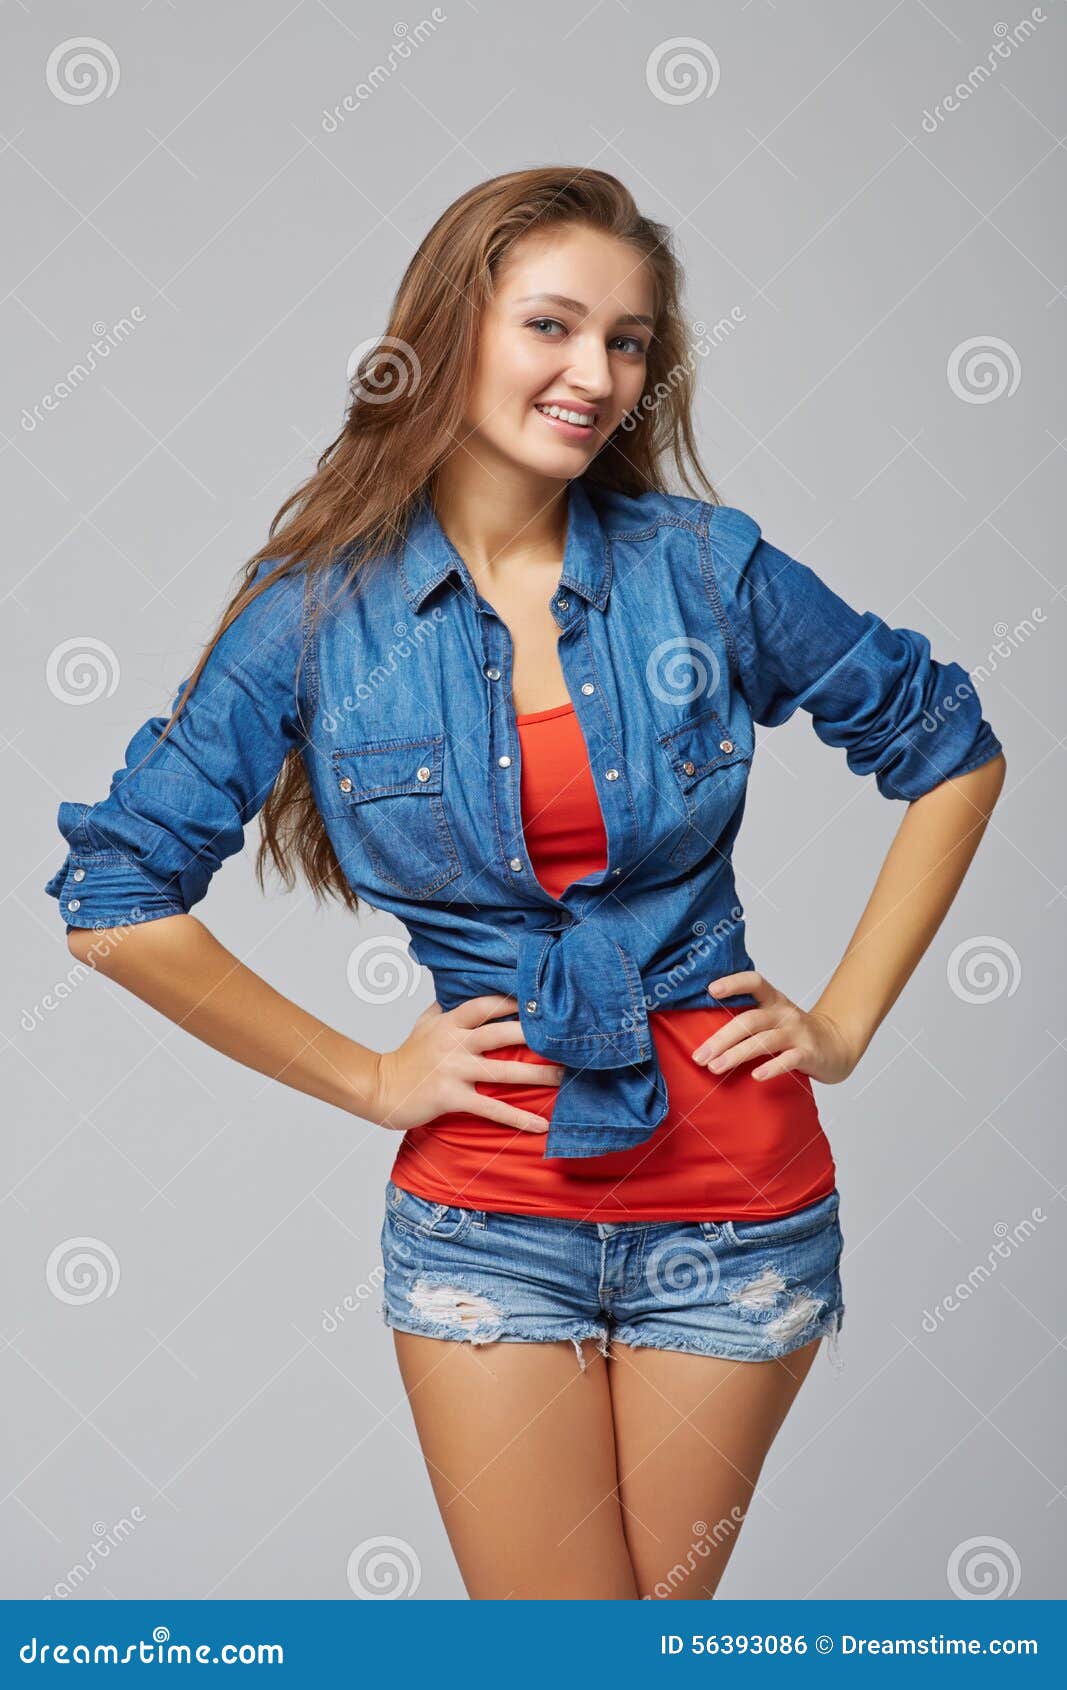 Denim Style Portrait of Teen Girl, Over Gray Background Stock Photo ...